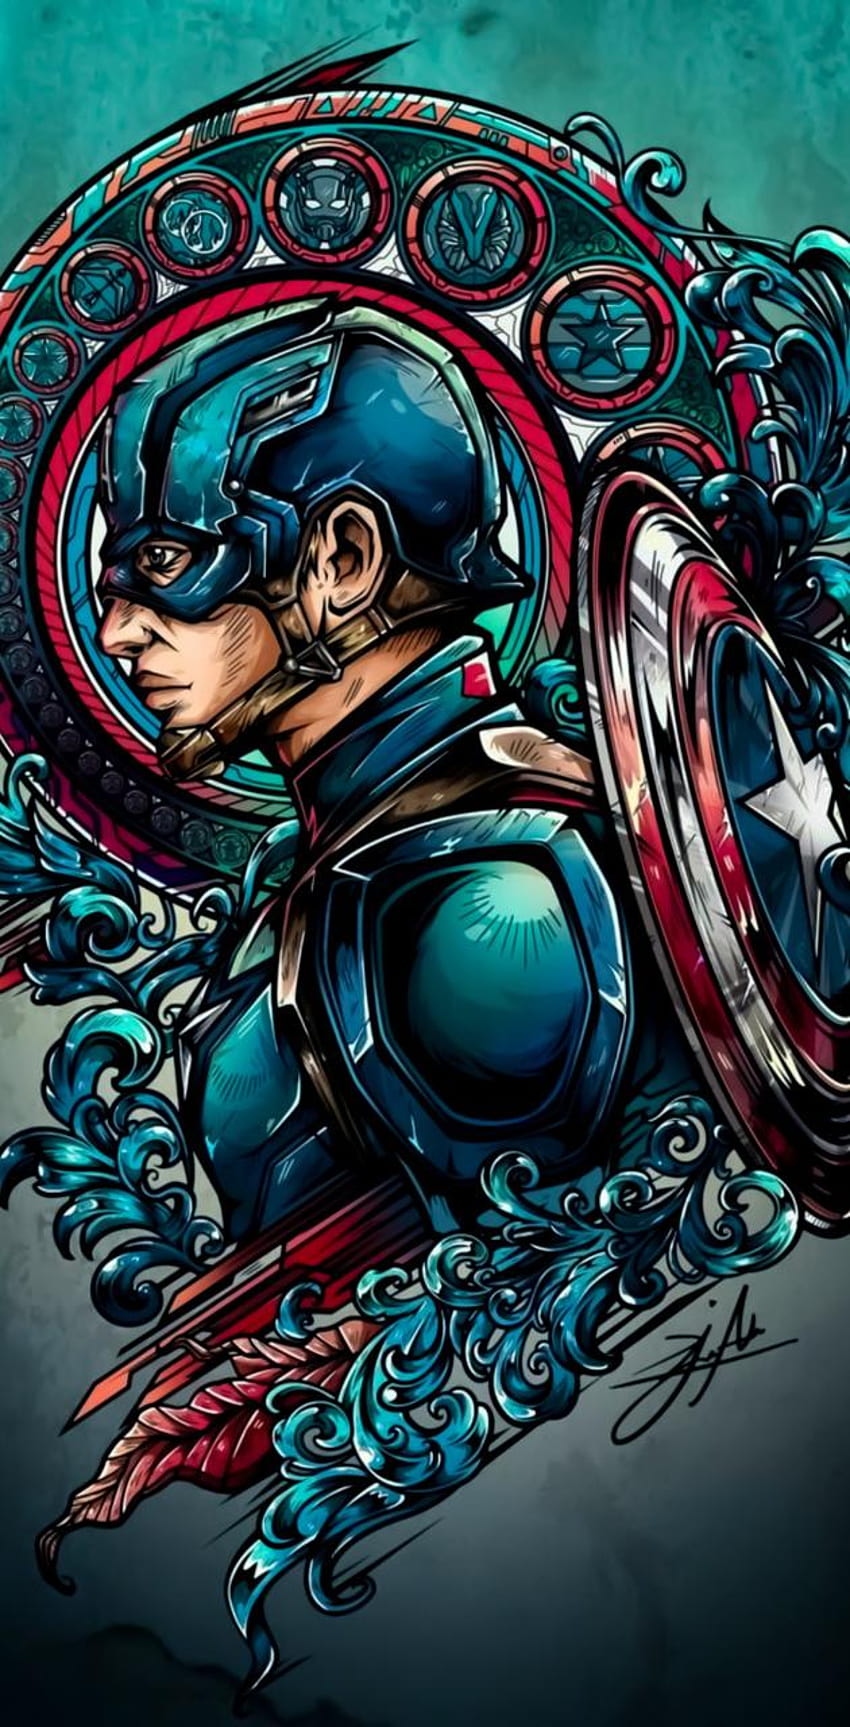 Captain America Captain America Captain America GIFs | Tenor